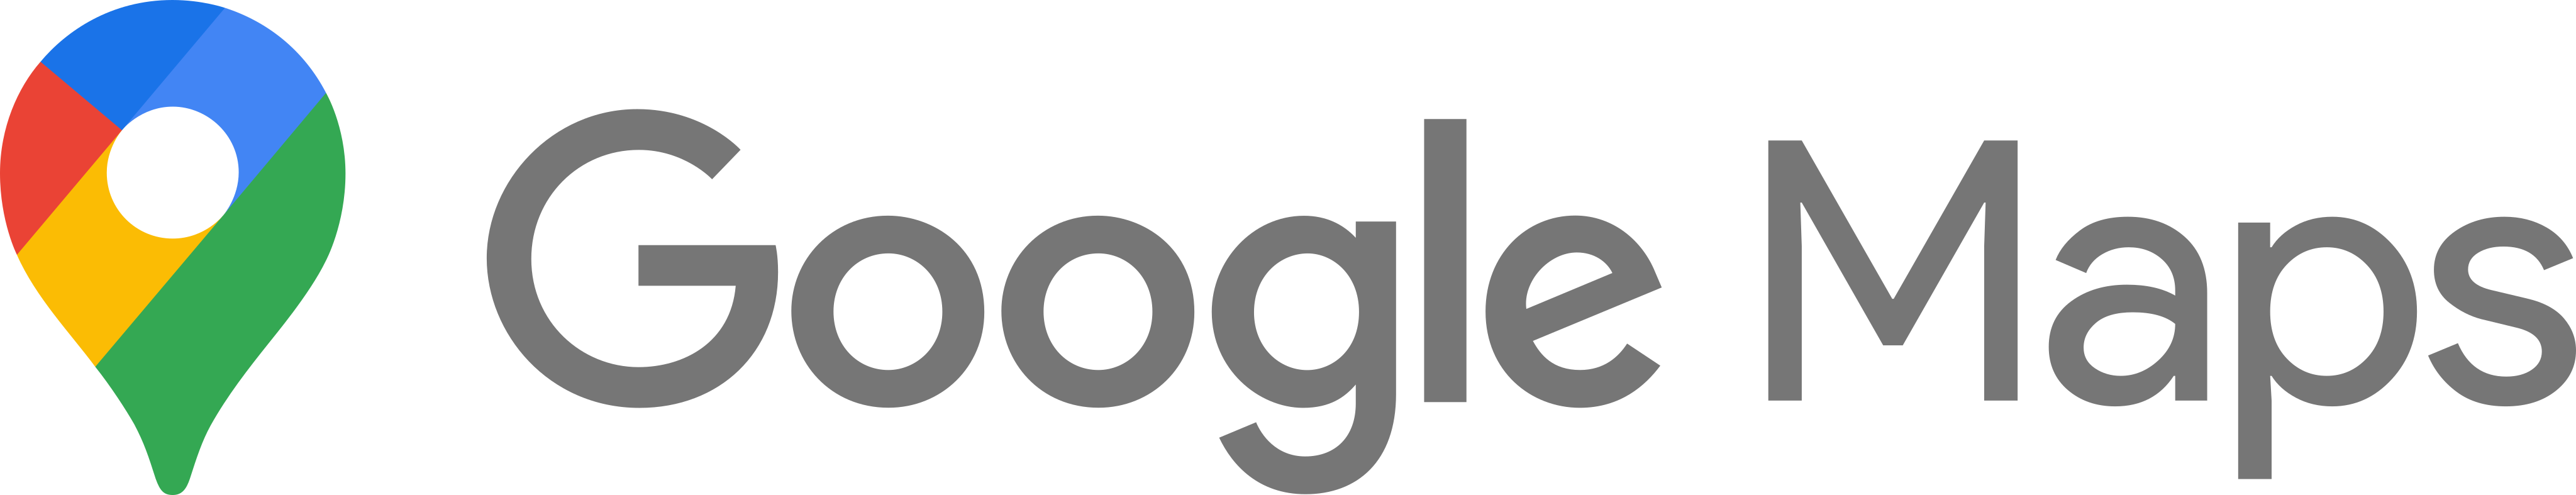 google maps logo 8 - Google Maps Logo